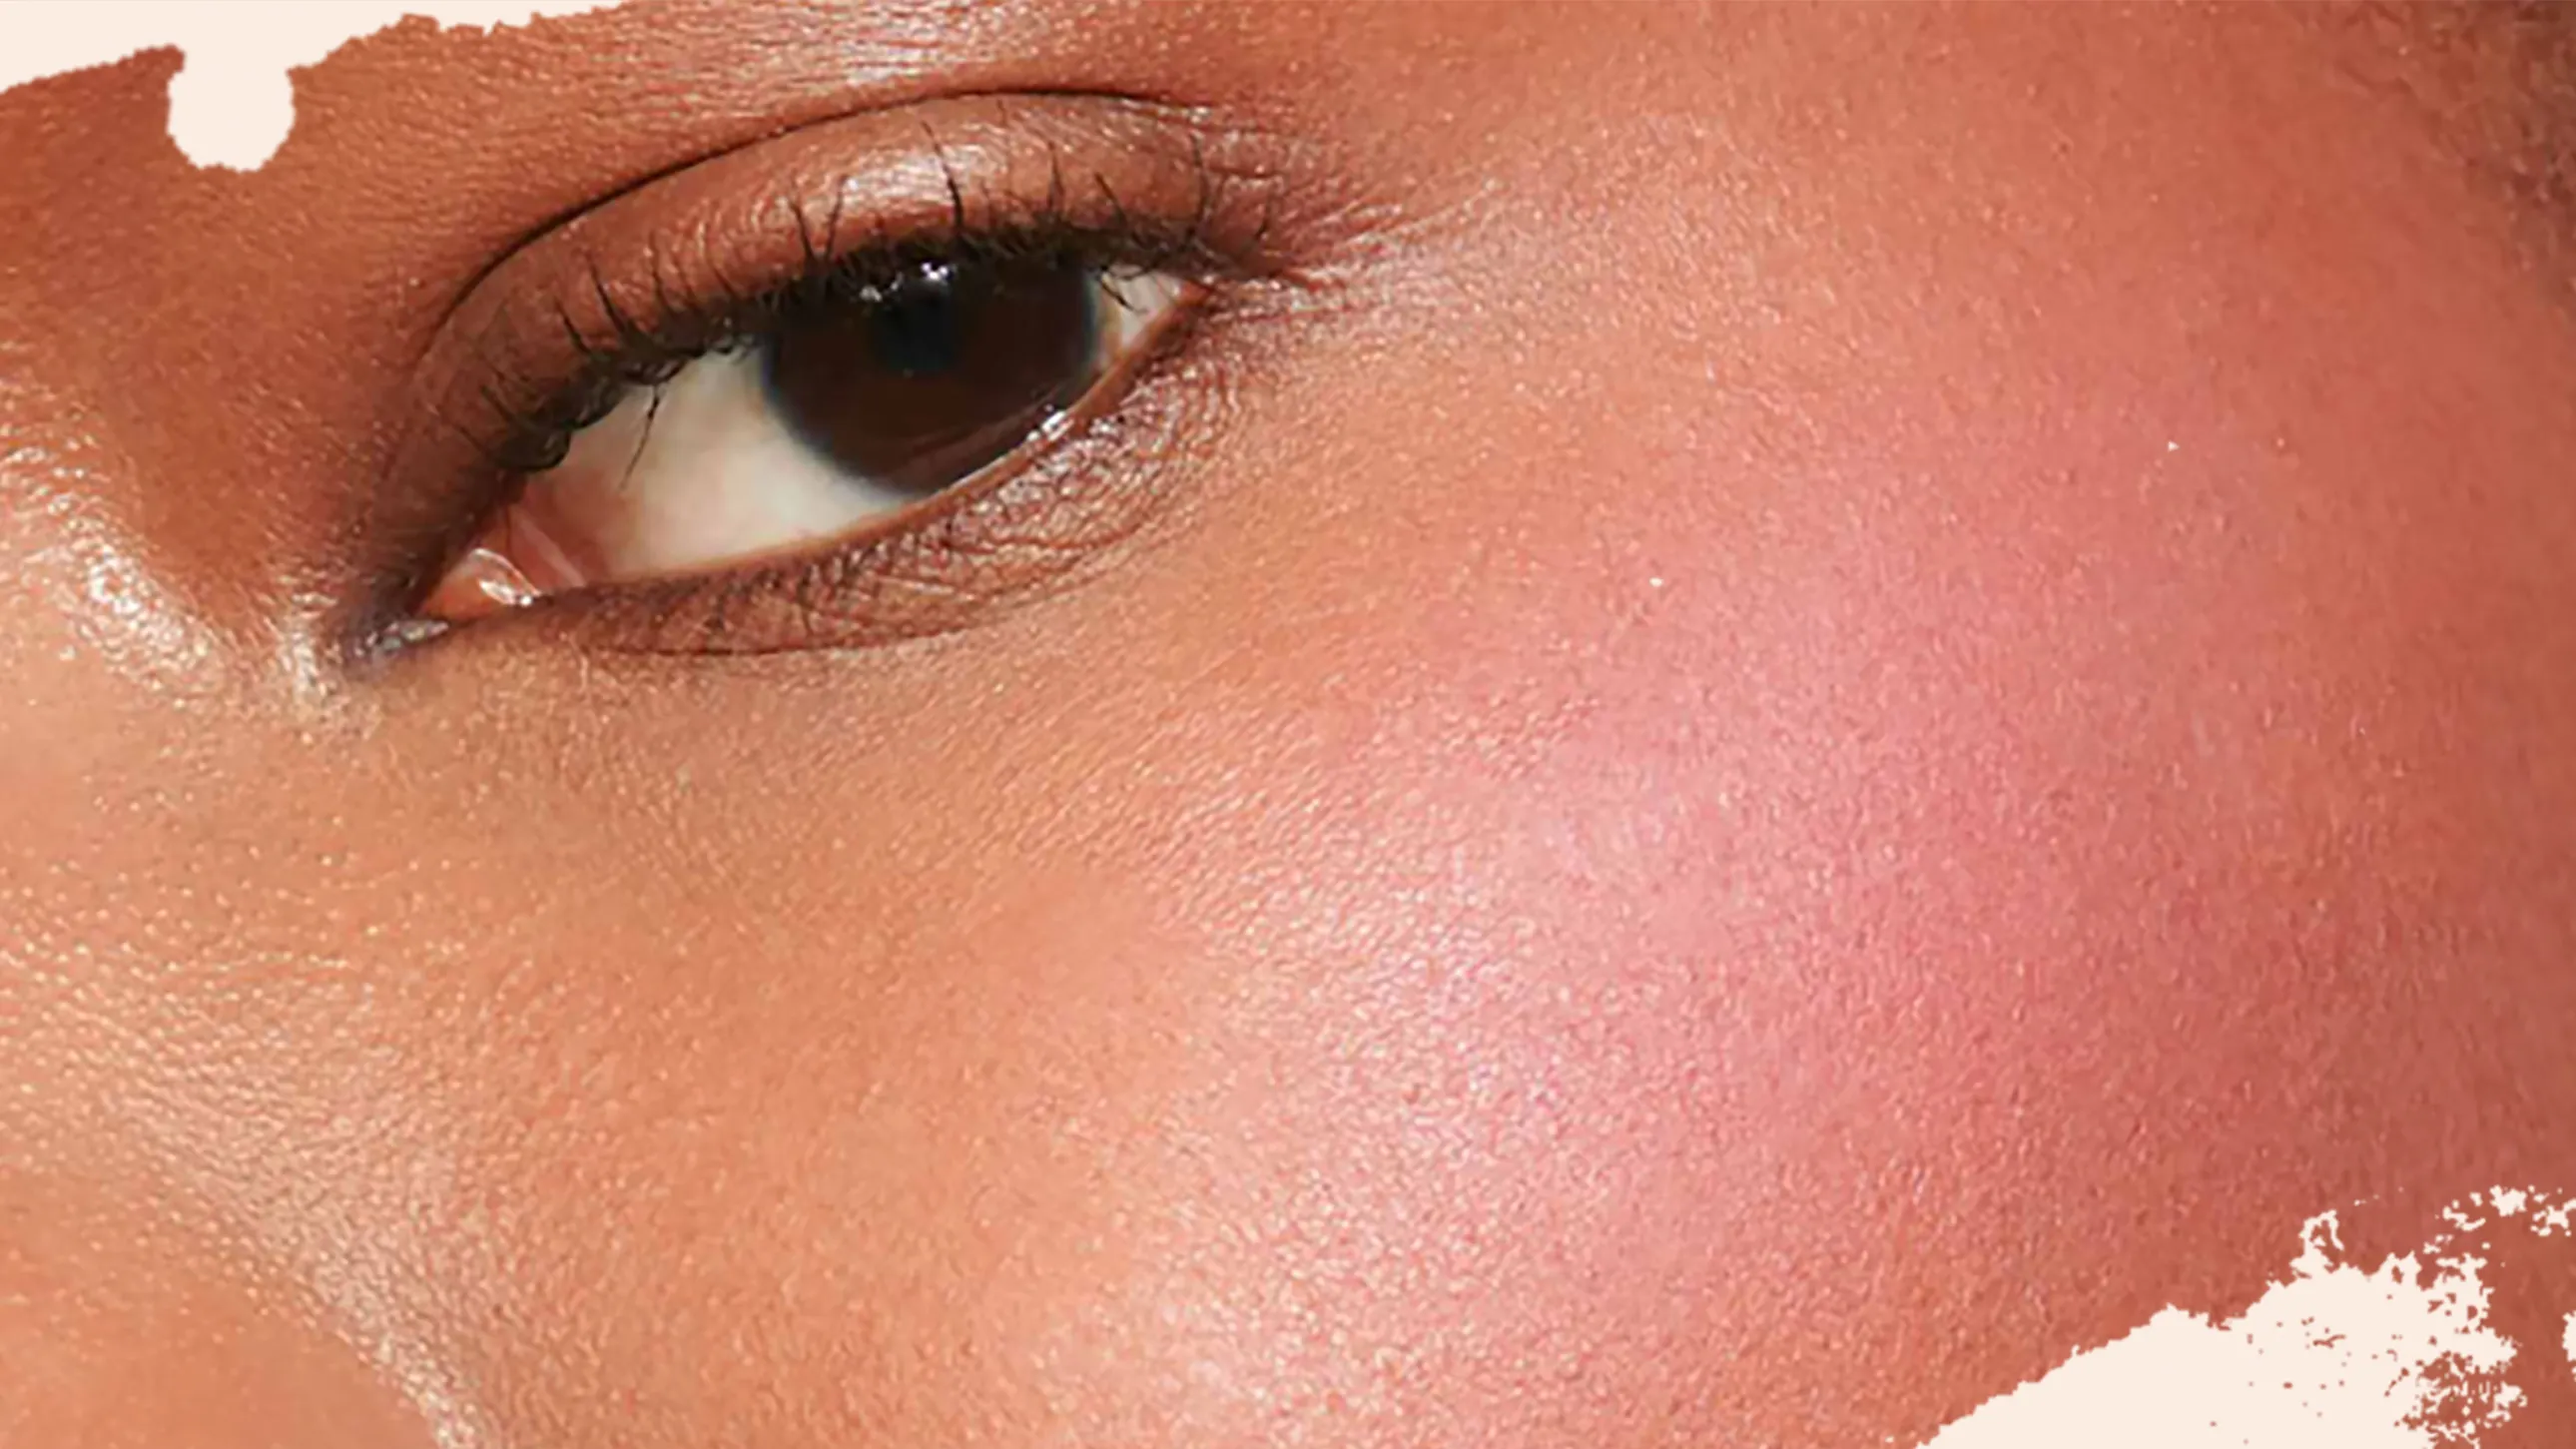 A makeup artist applying powder blush to create rosy cheeks